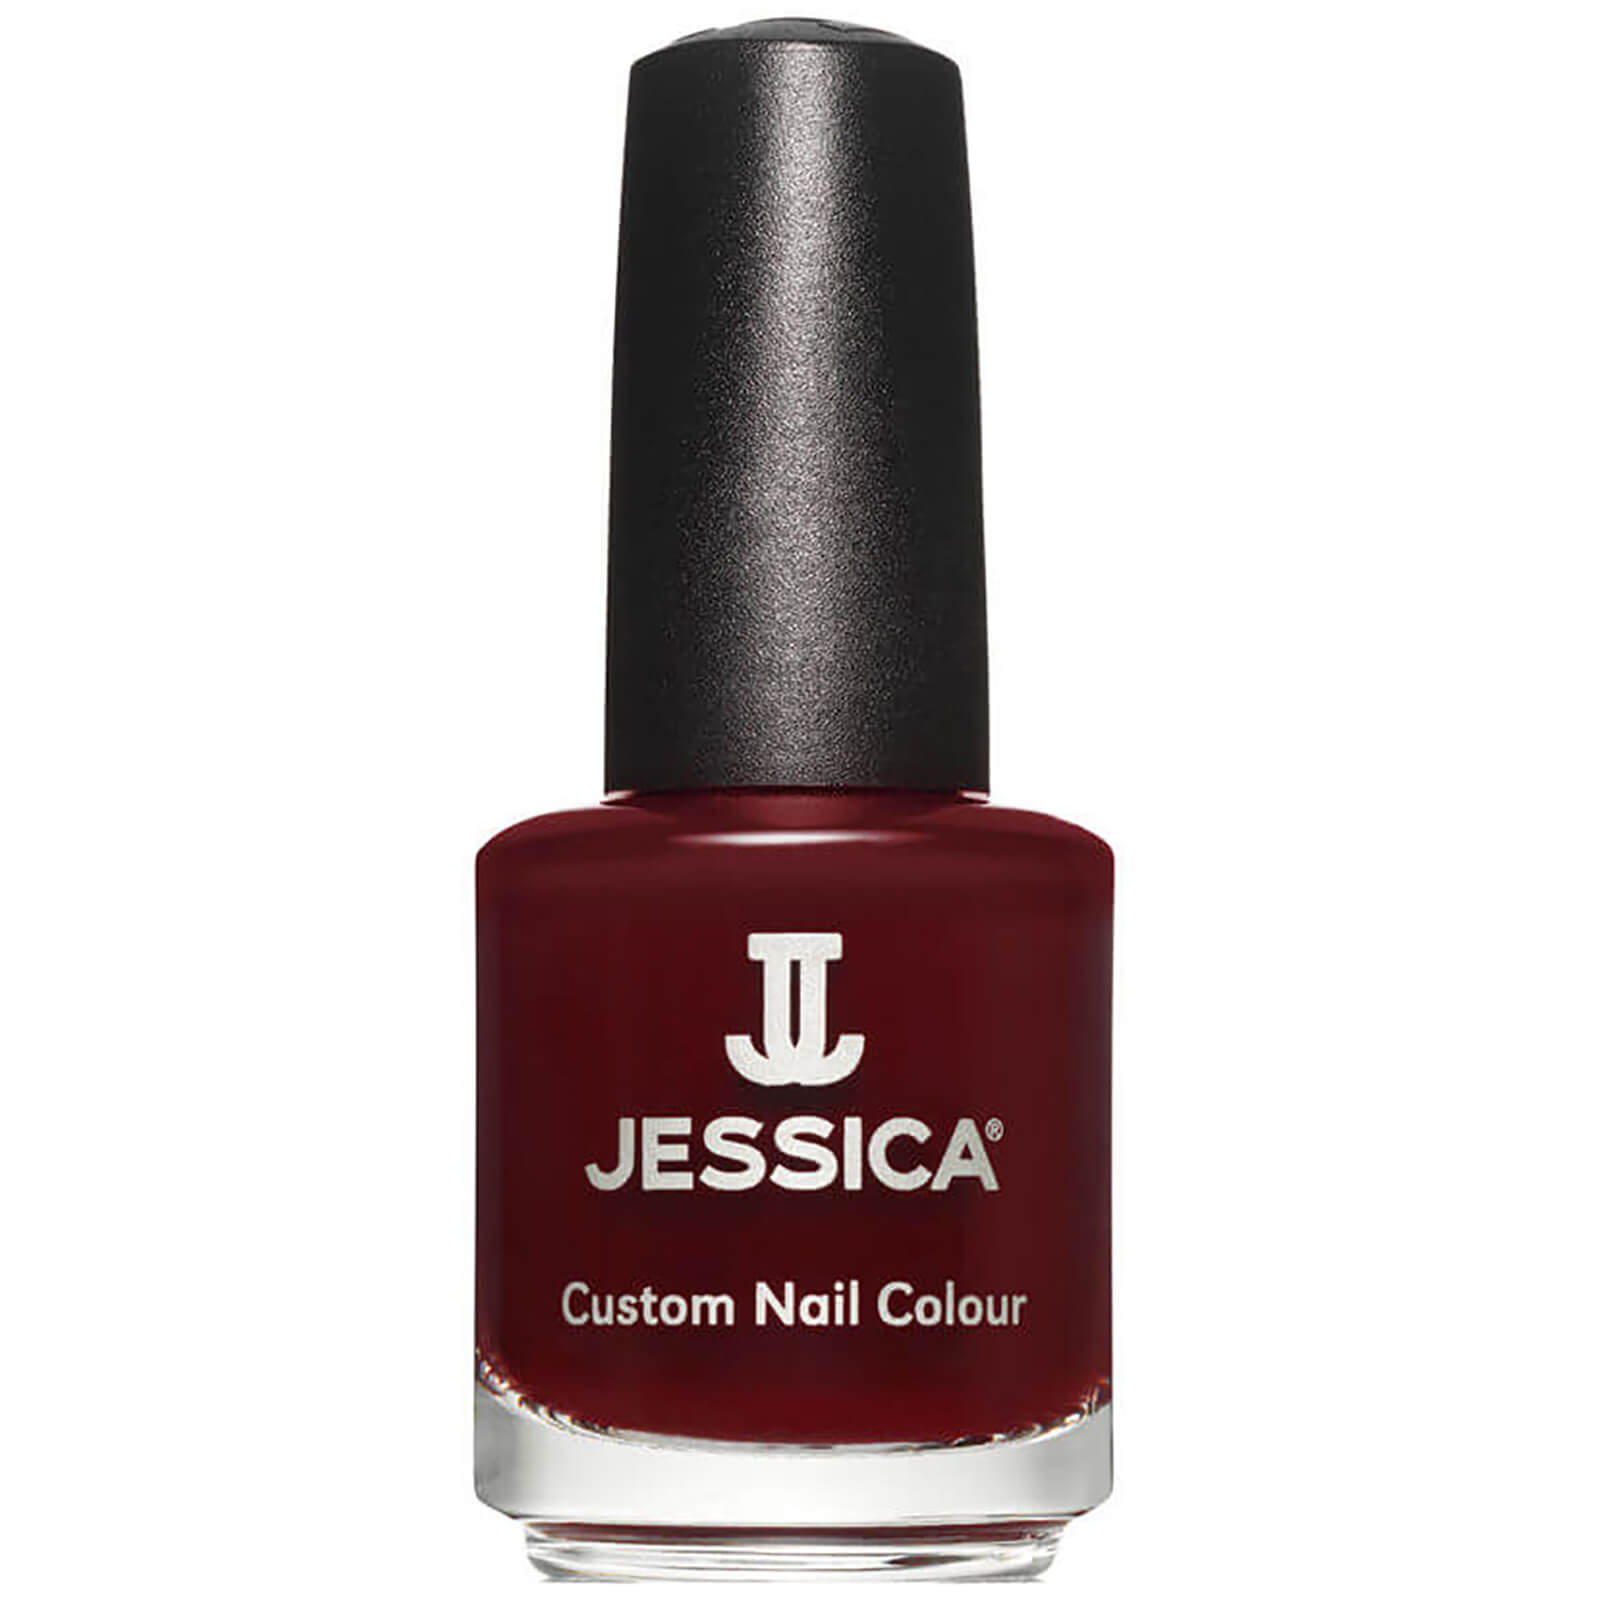 Image of Jessica Custom Nail Colour - Cherrywood (14.8ml)